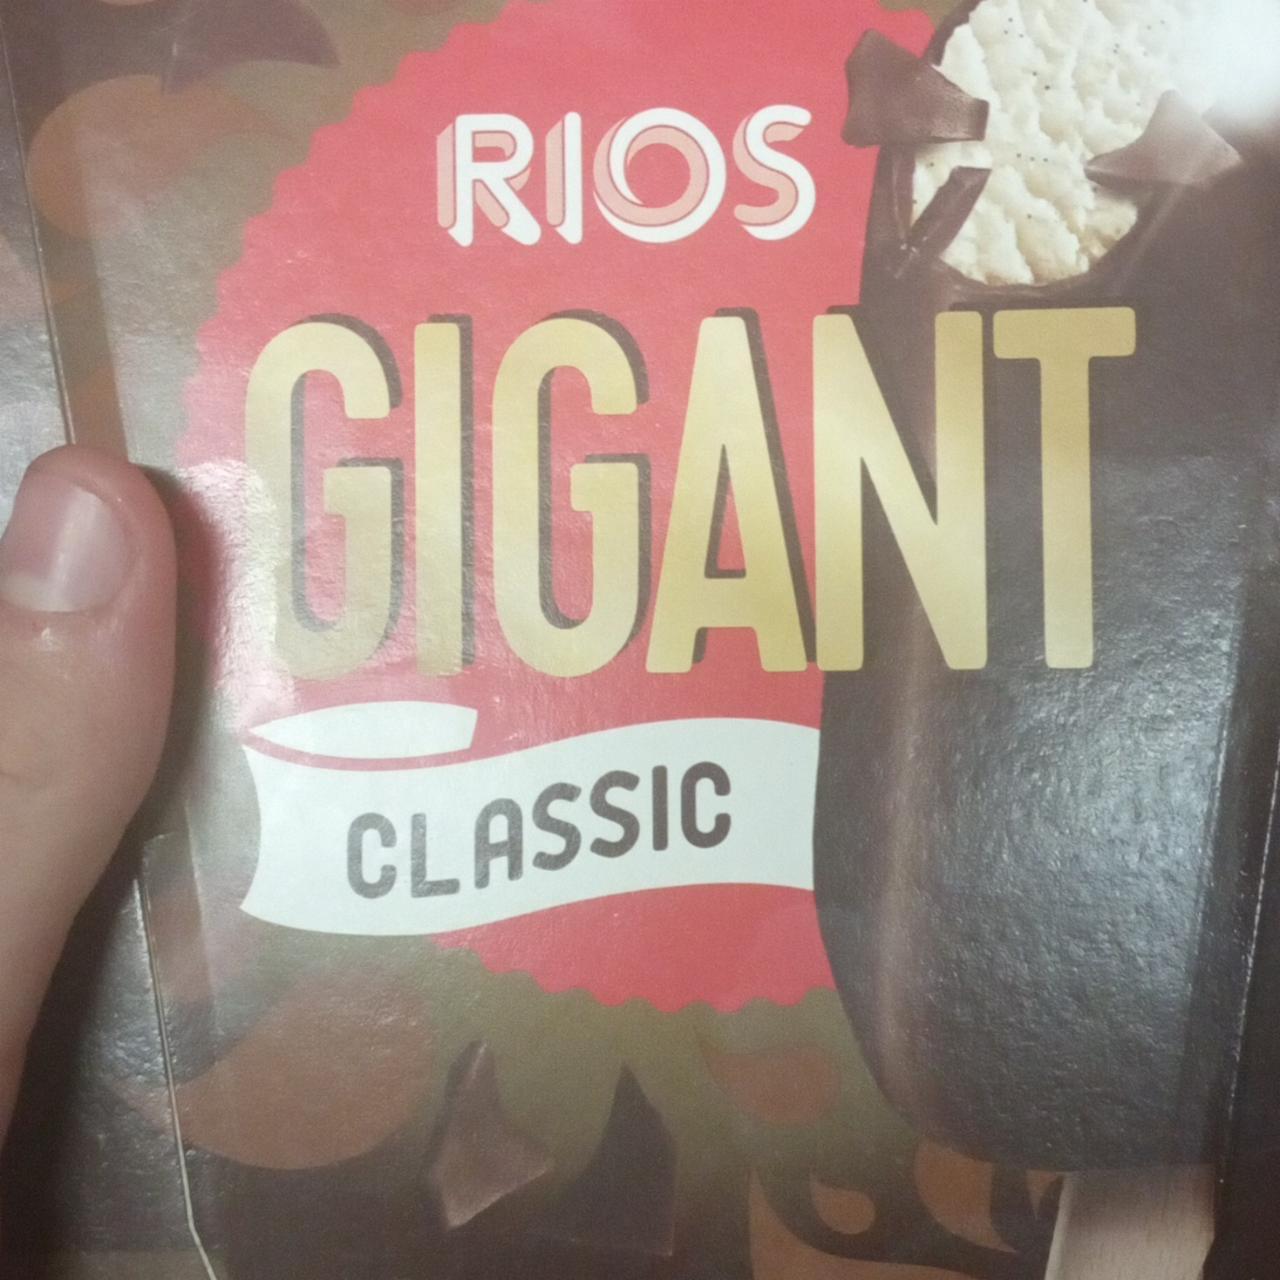 Képek - Gigant classic Rios